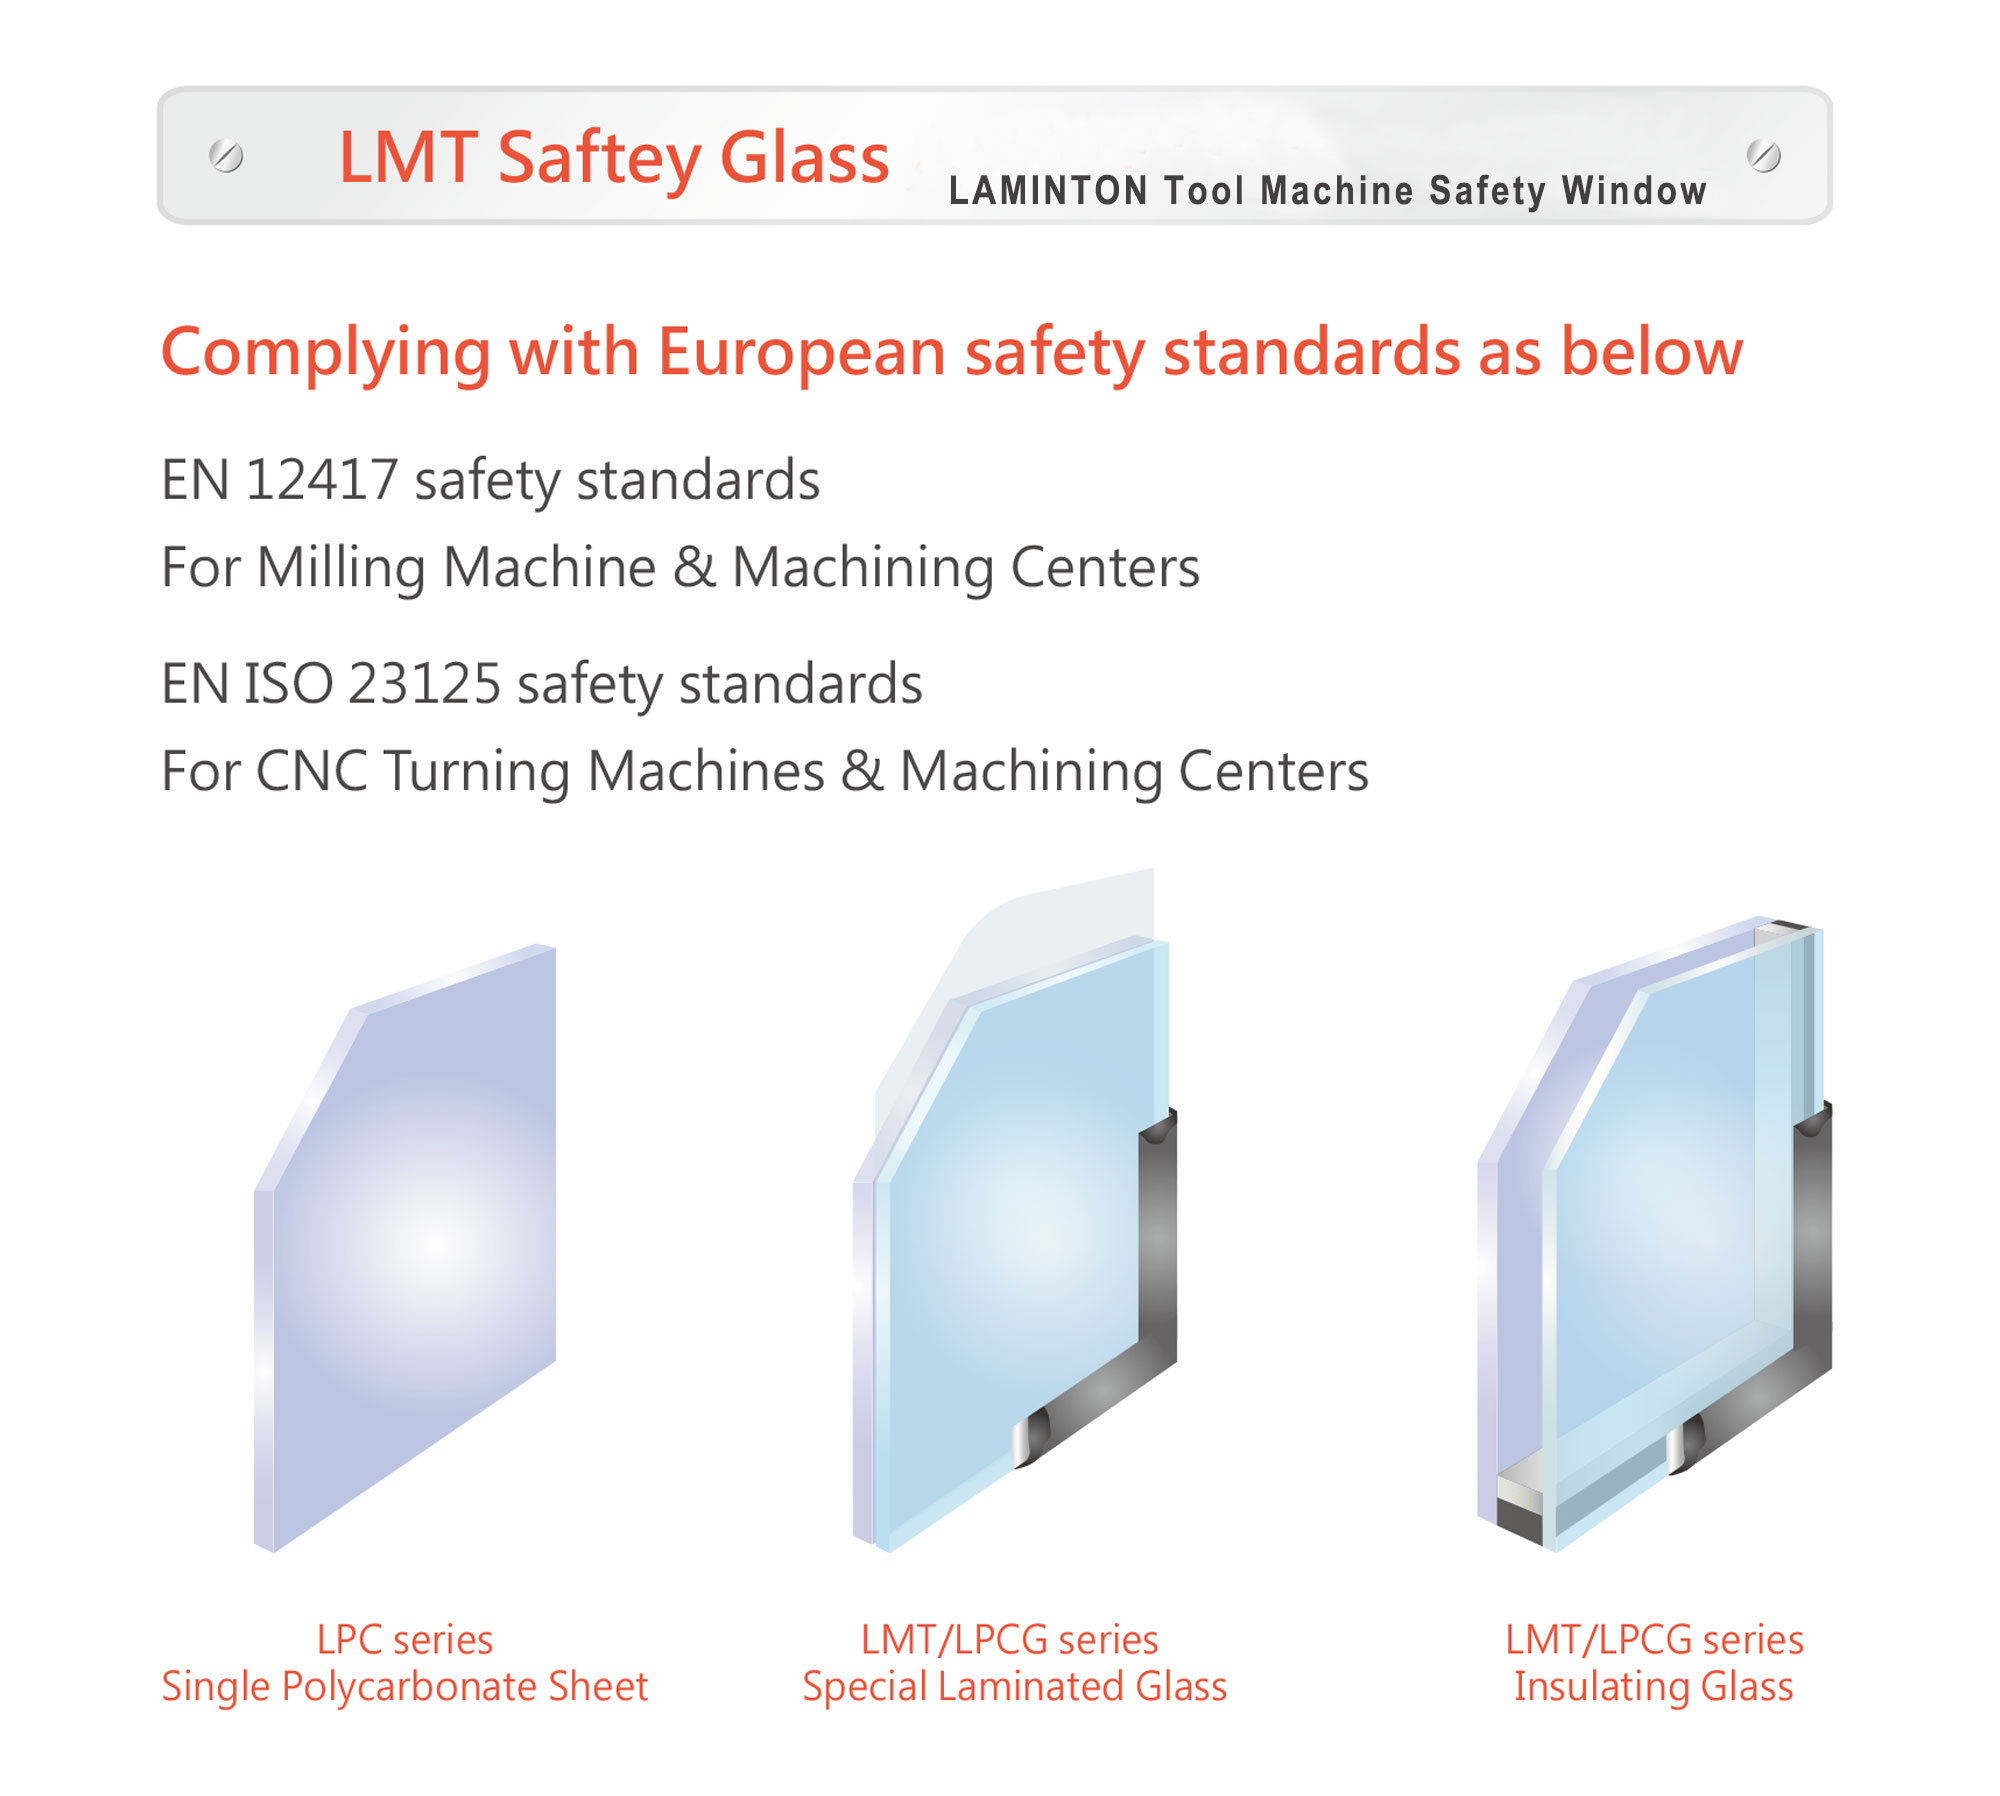 LMT-LAMINTON Tool Machine Safety Window